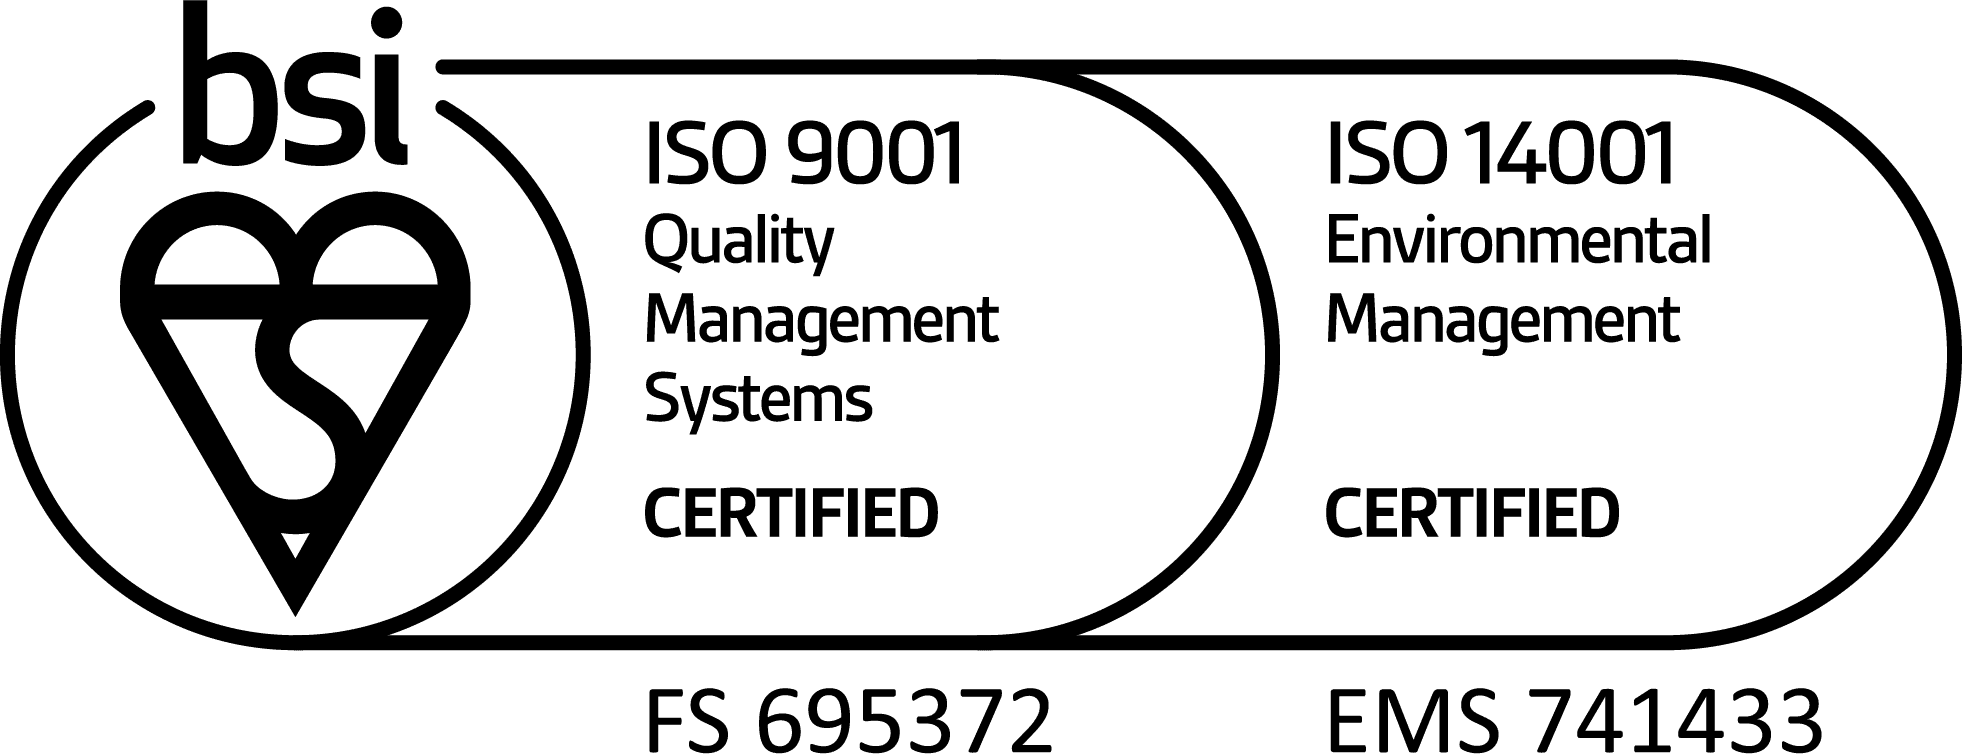 rhopoint-intruments-iso-14001-iso-9001-certificate-logo